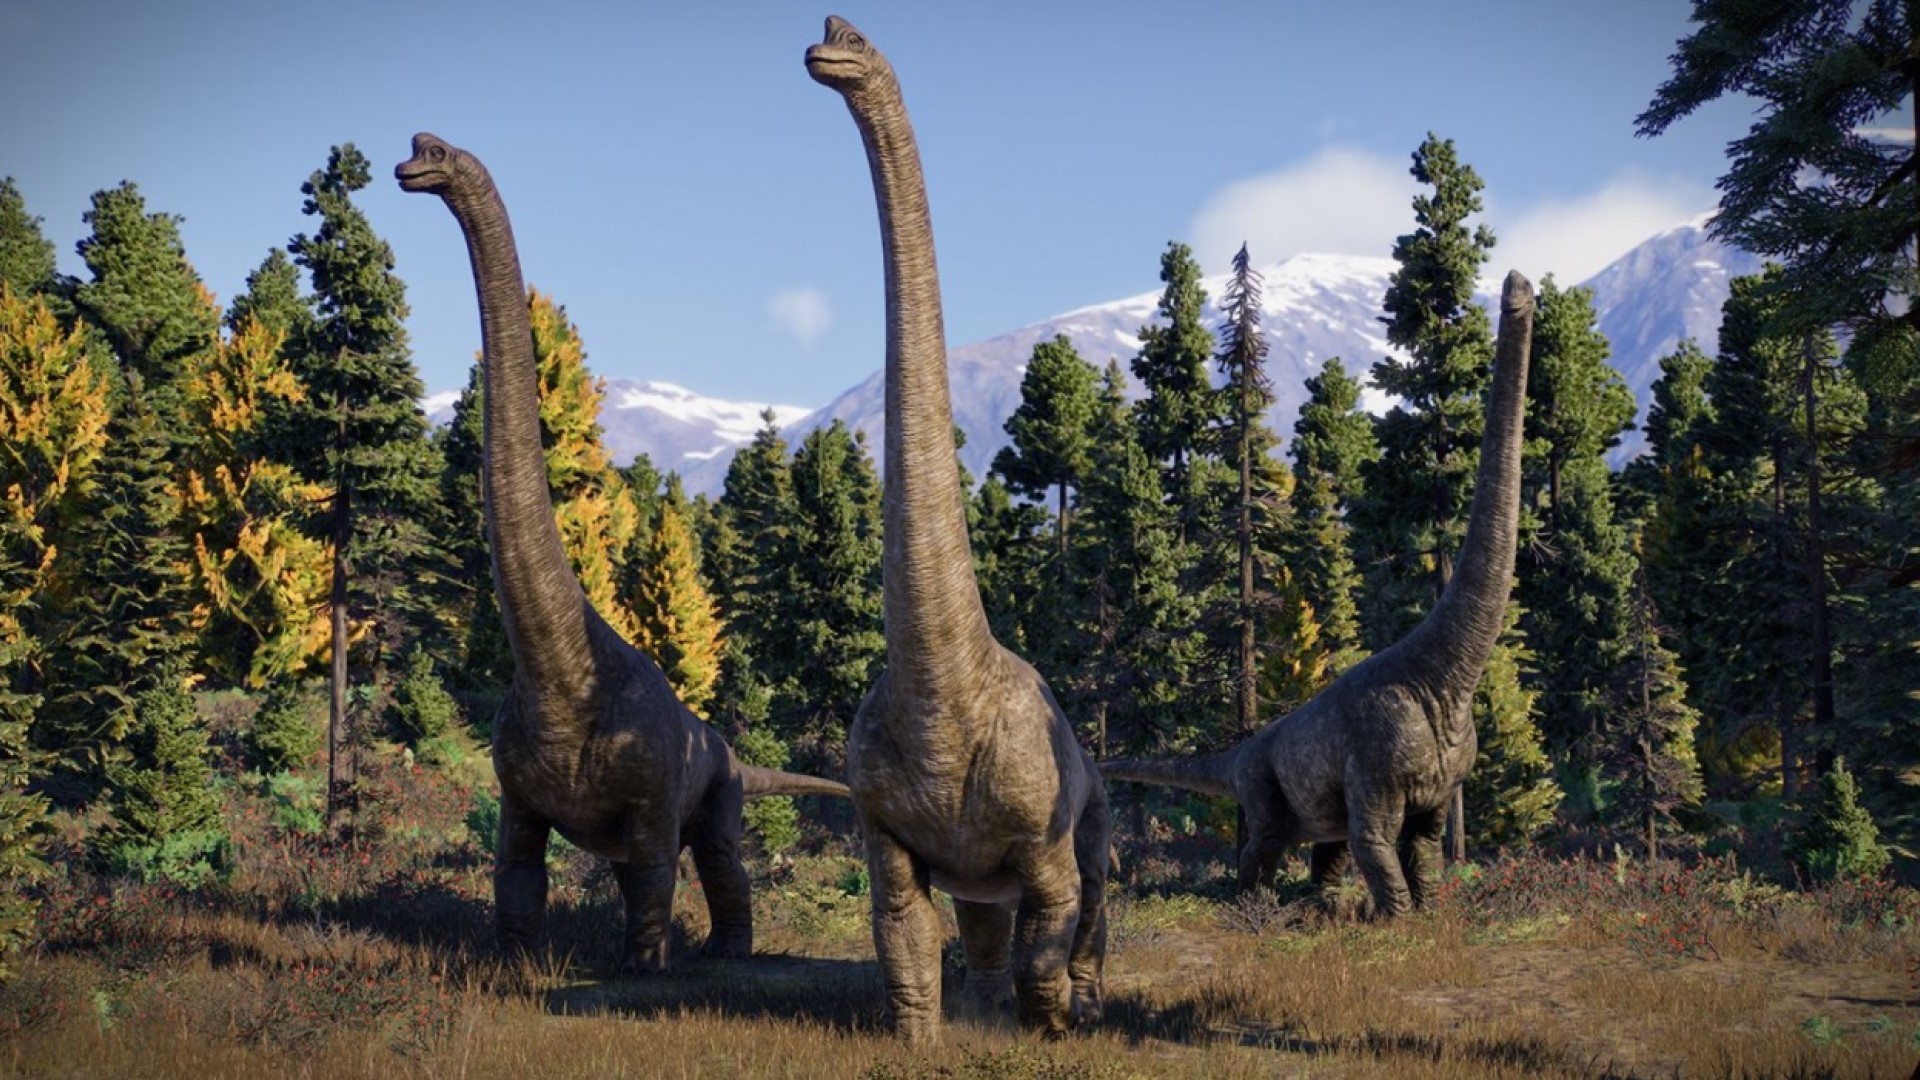 Jurassic World Evolution 2 HD Wallpapers